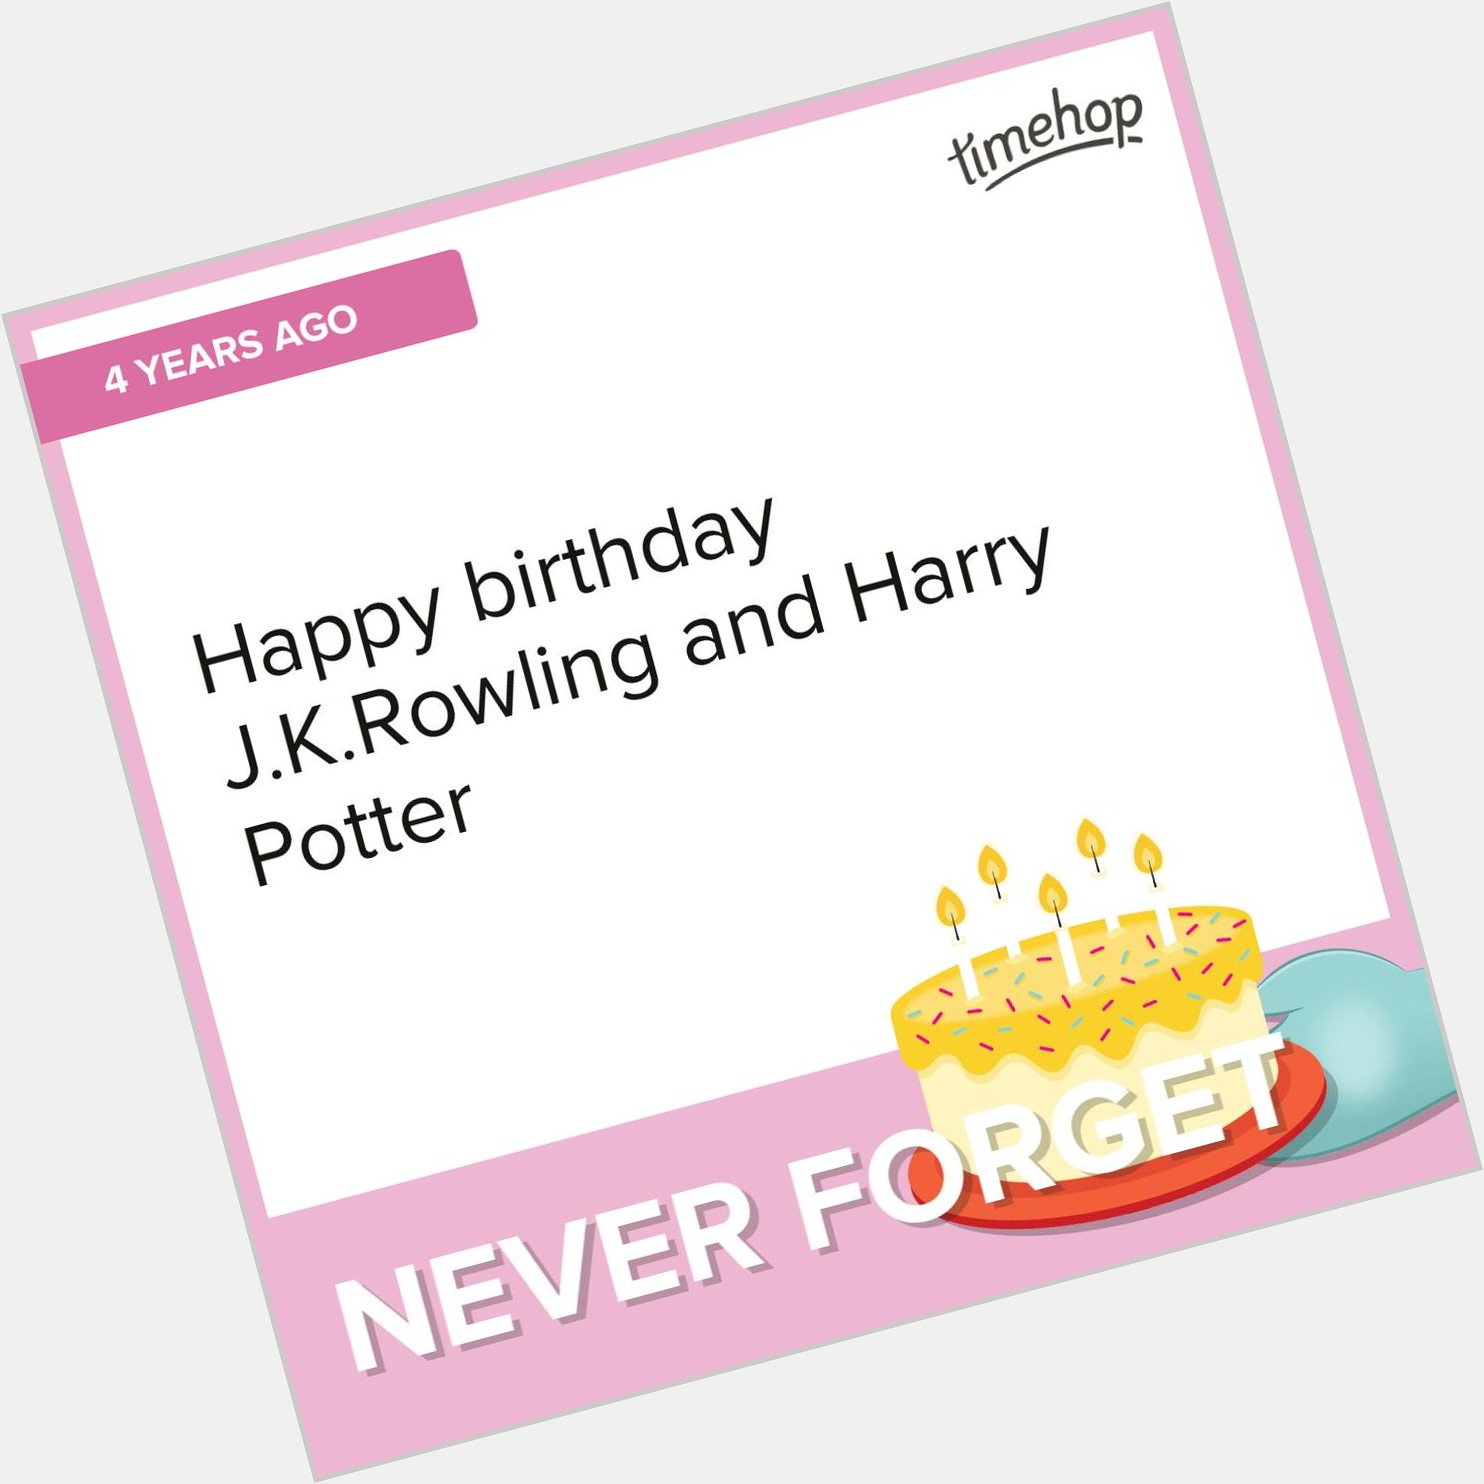 Happy Birthday J.K.Rowling and Harry Potter  